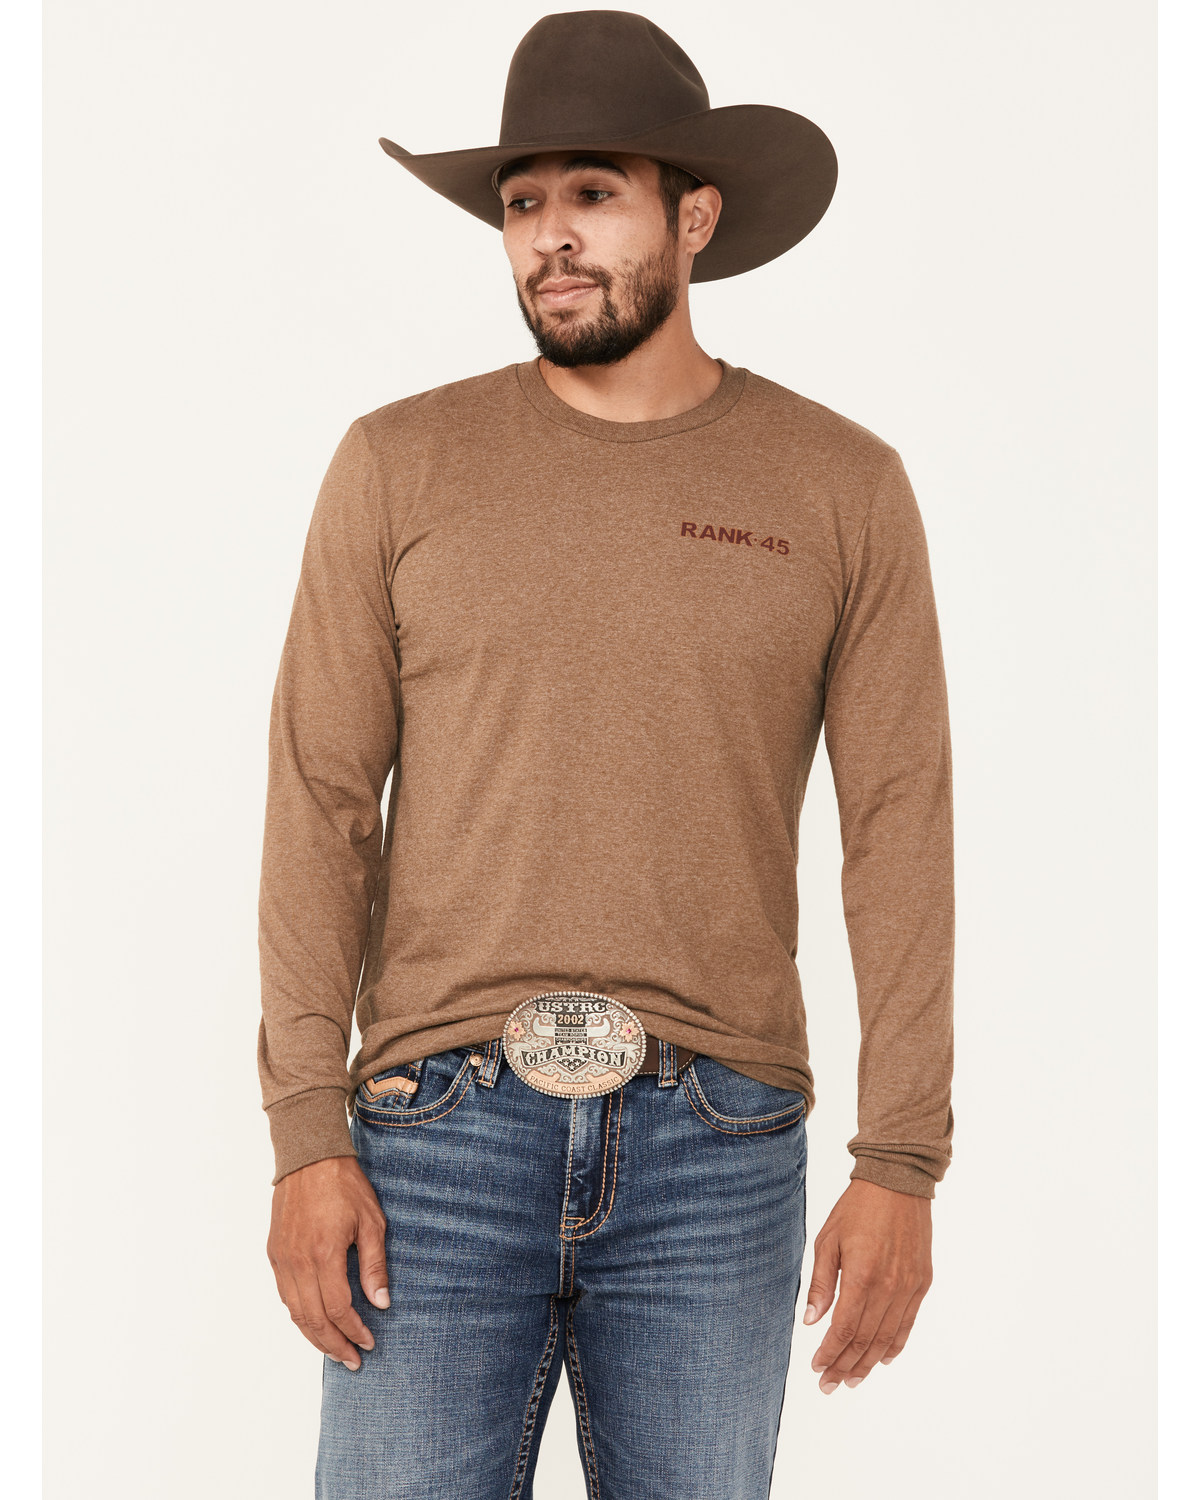 RANK 45® Men's Chardon Western Long Sleeve Graphic T-Shirt